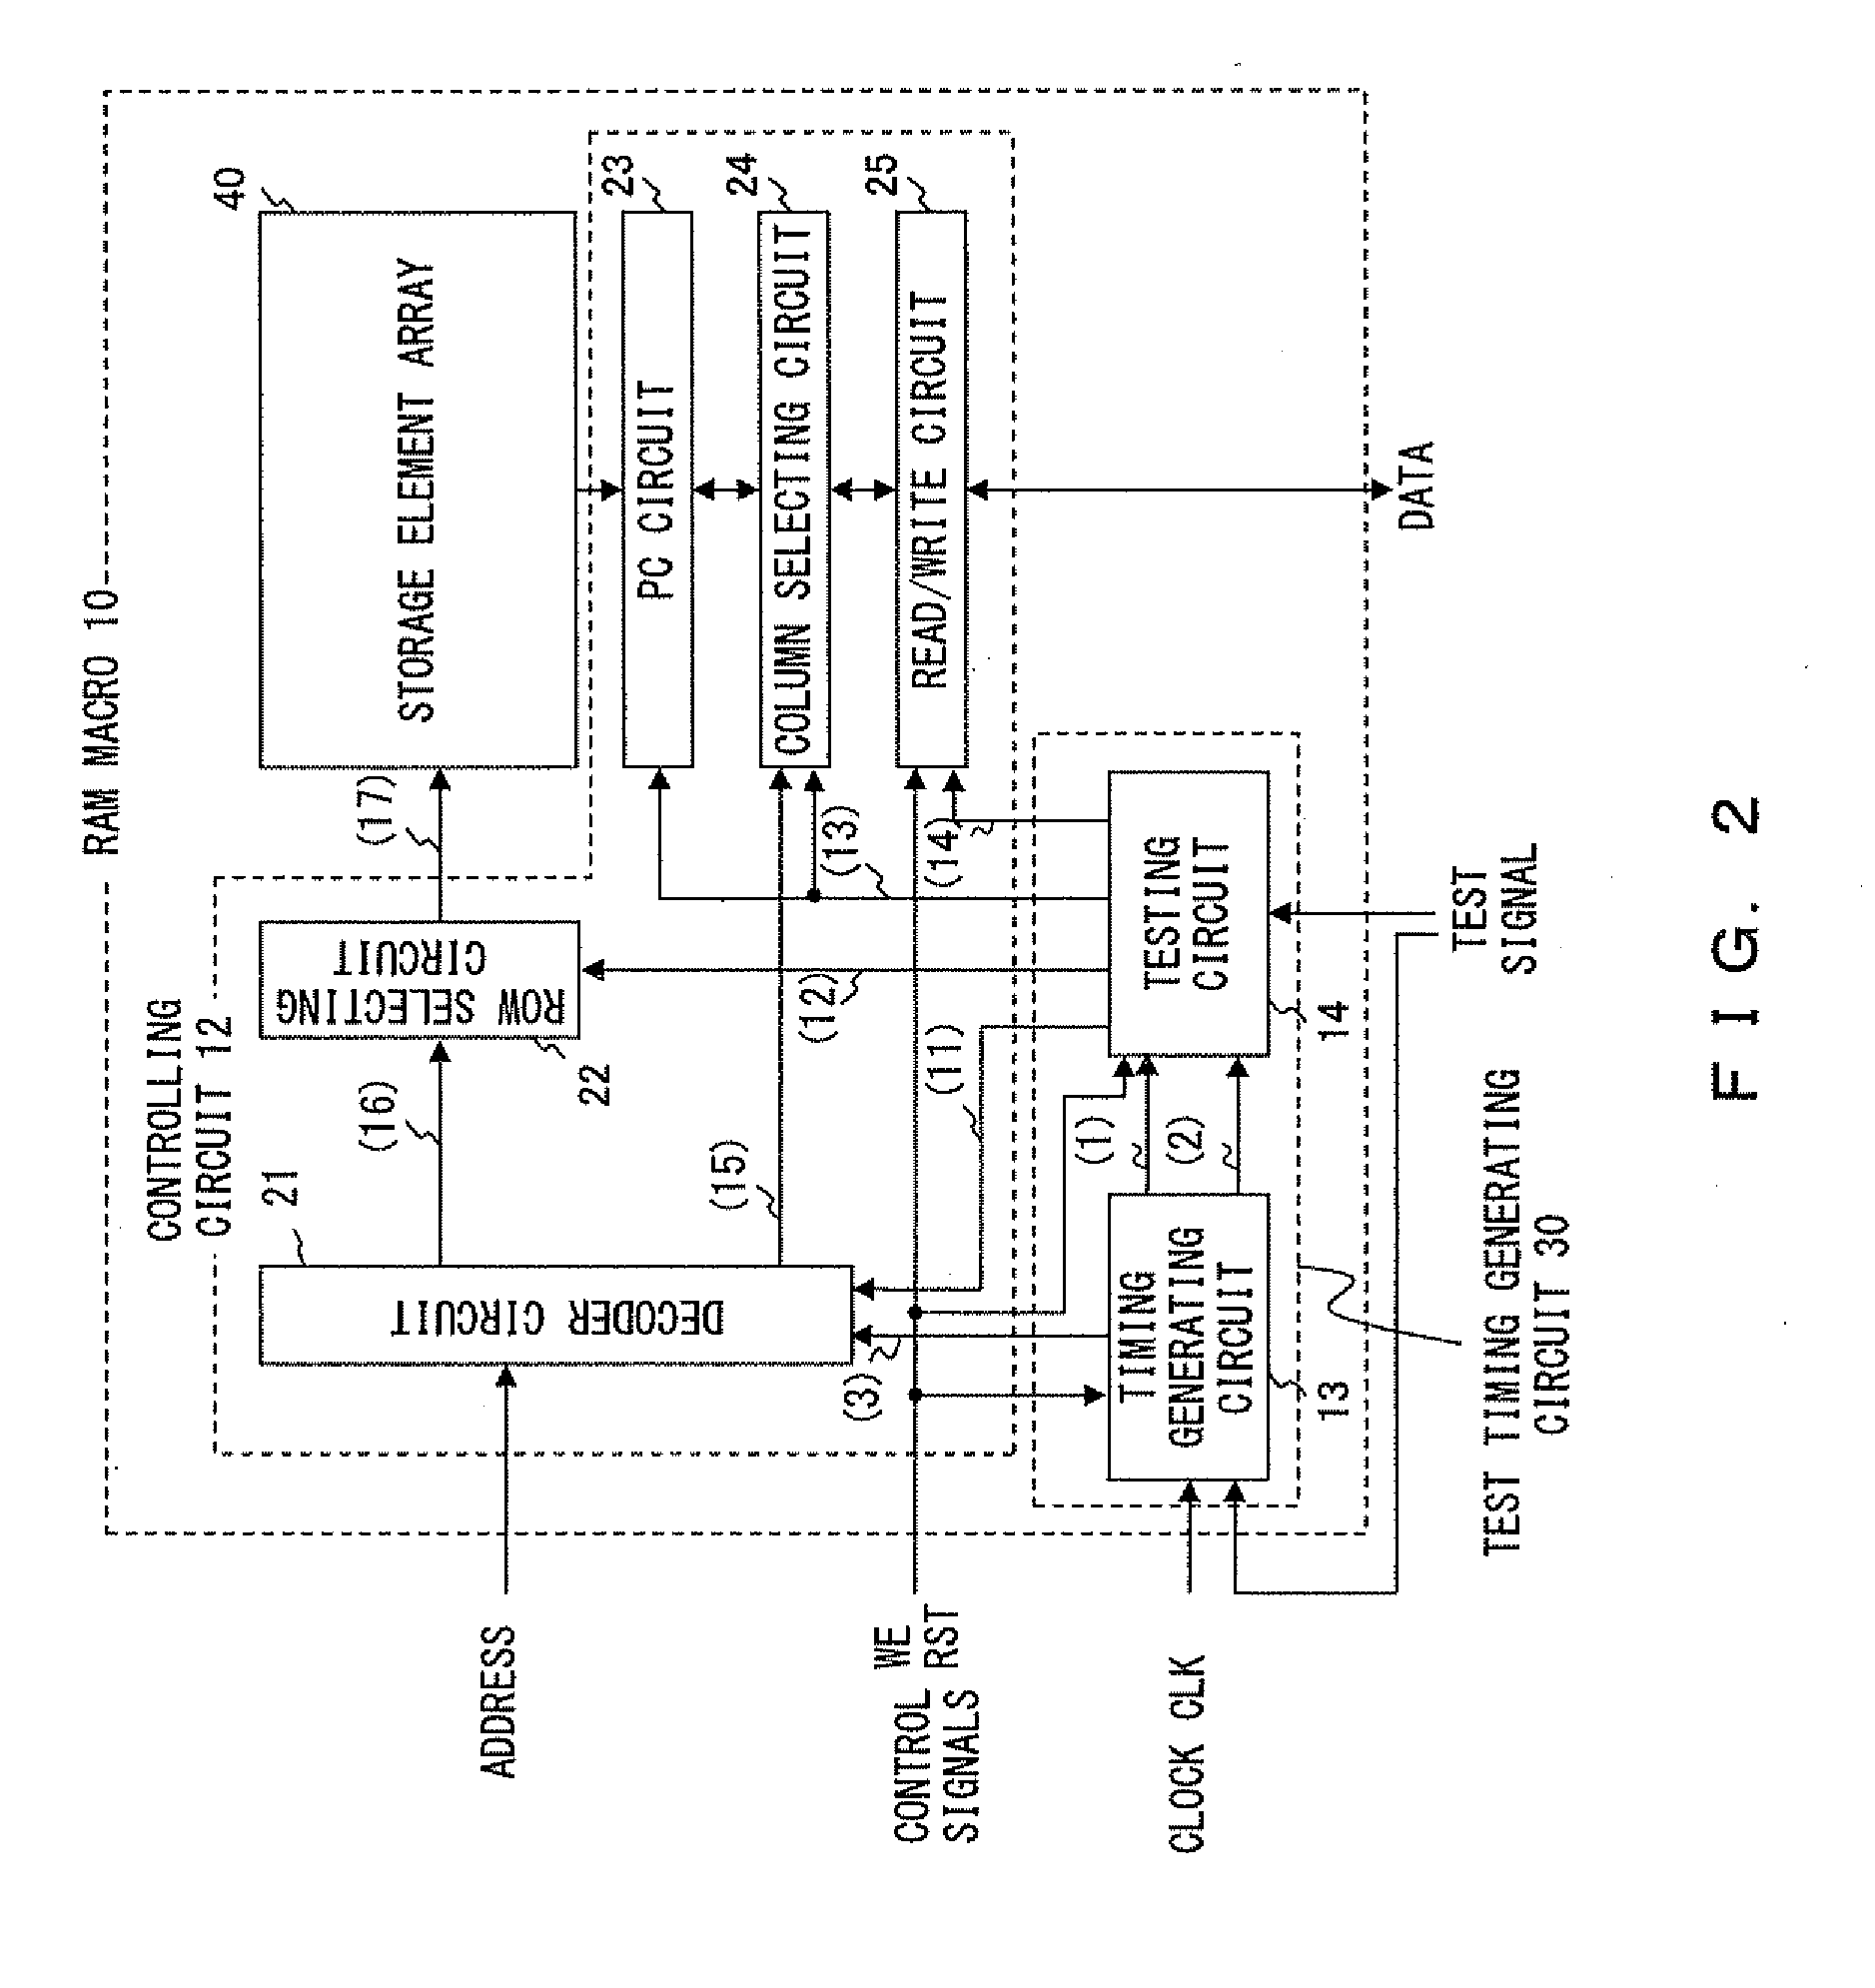 Ram macro and timing generating circuit thereof